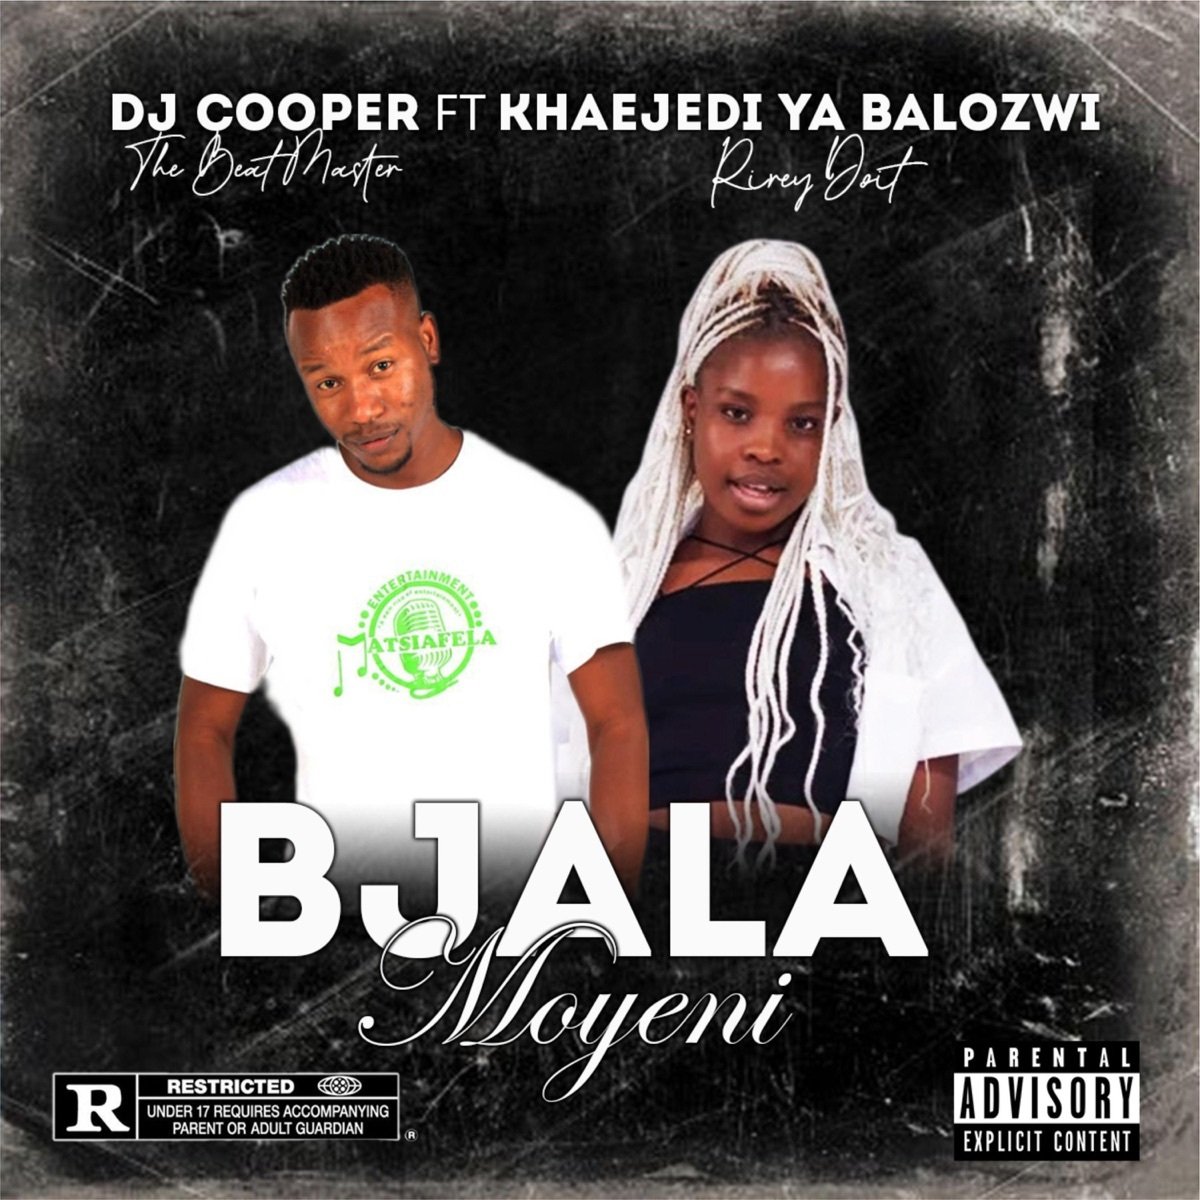 Bjala Moyeni - Dj Cooper the beat master feat Khaejedi Ya Balozwi@0Bolomp3.com.com